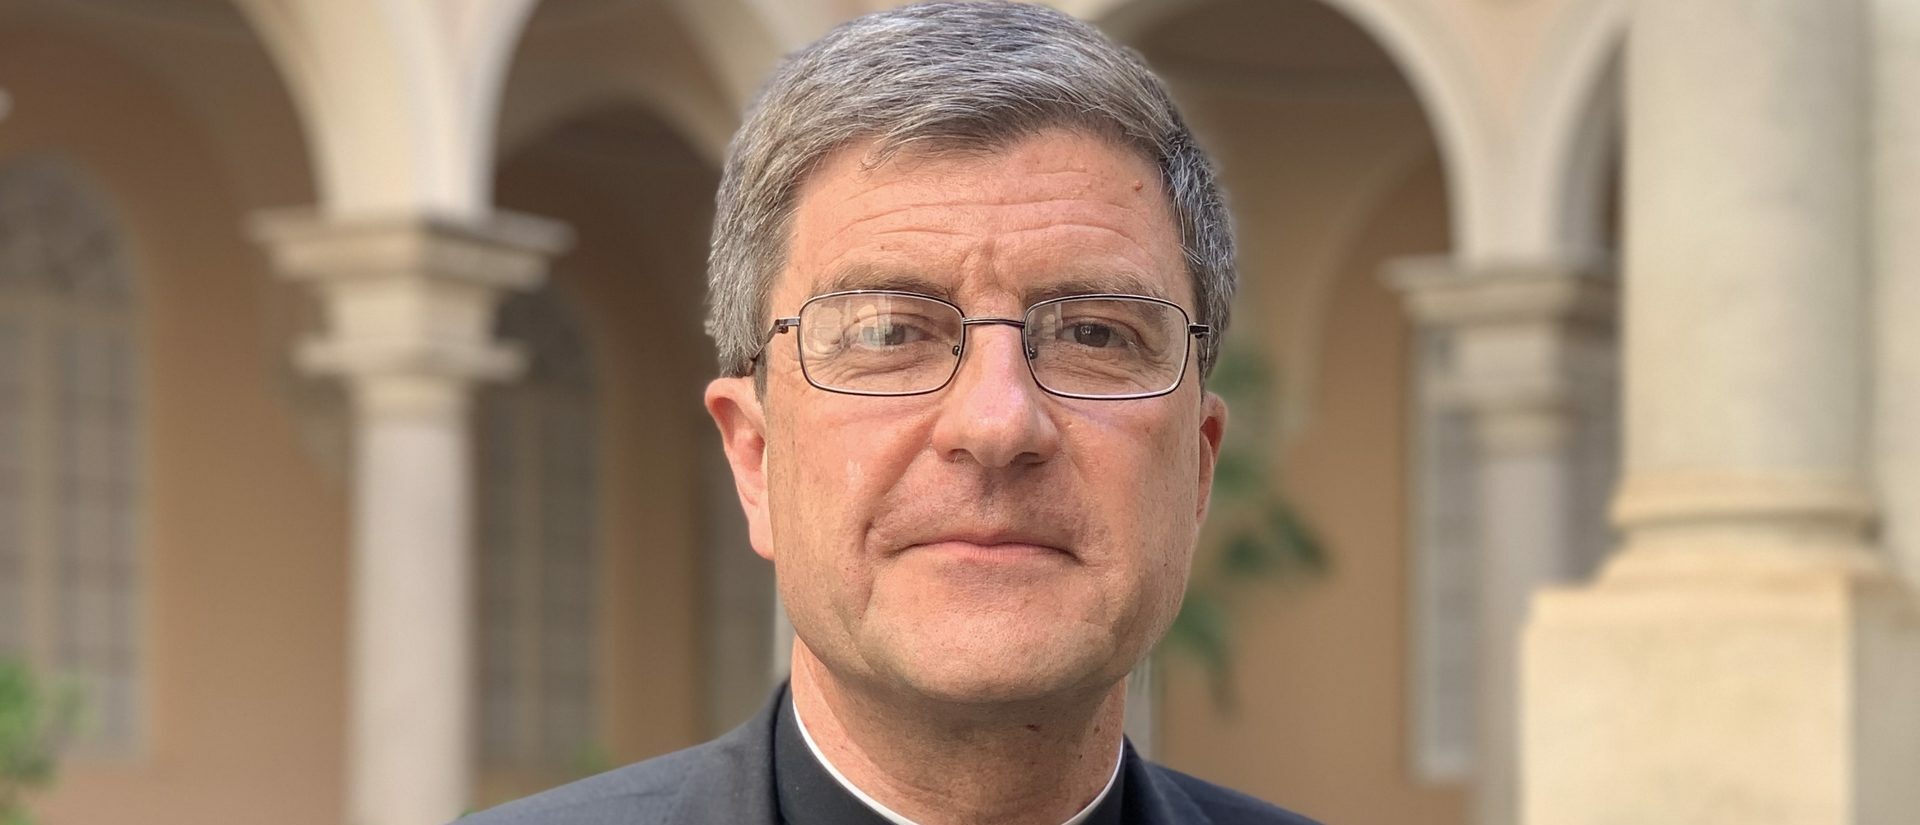 Mgr Eric de Moulins-Beaufort conteste la suspension des messes en France  | © I.Media